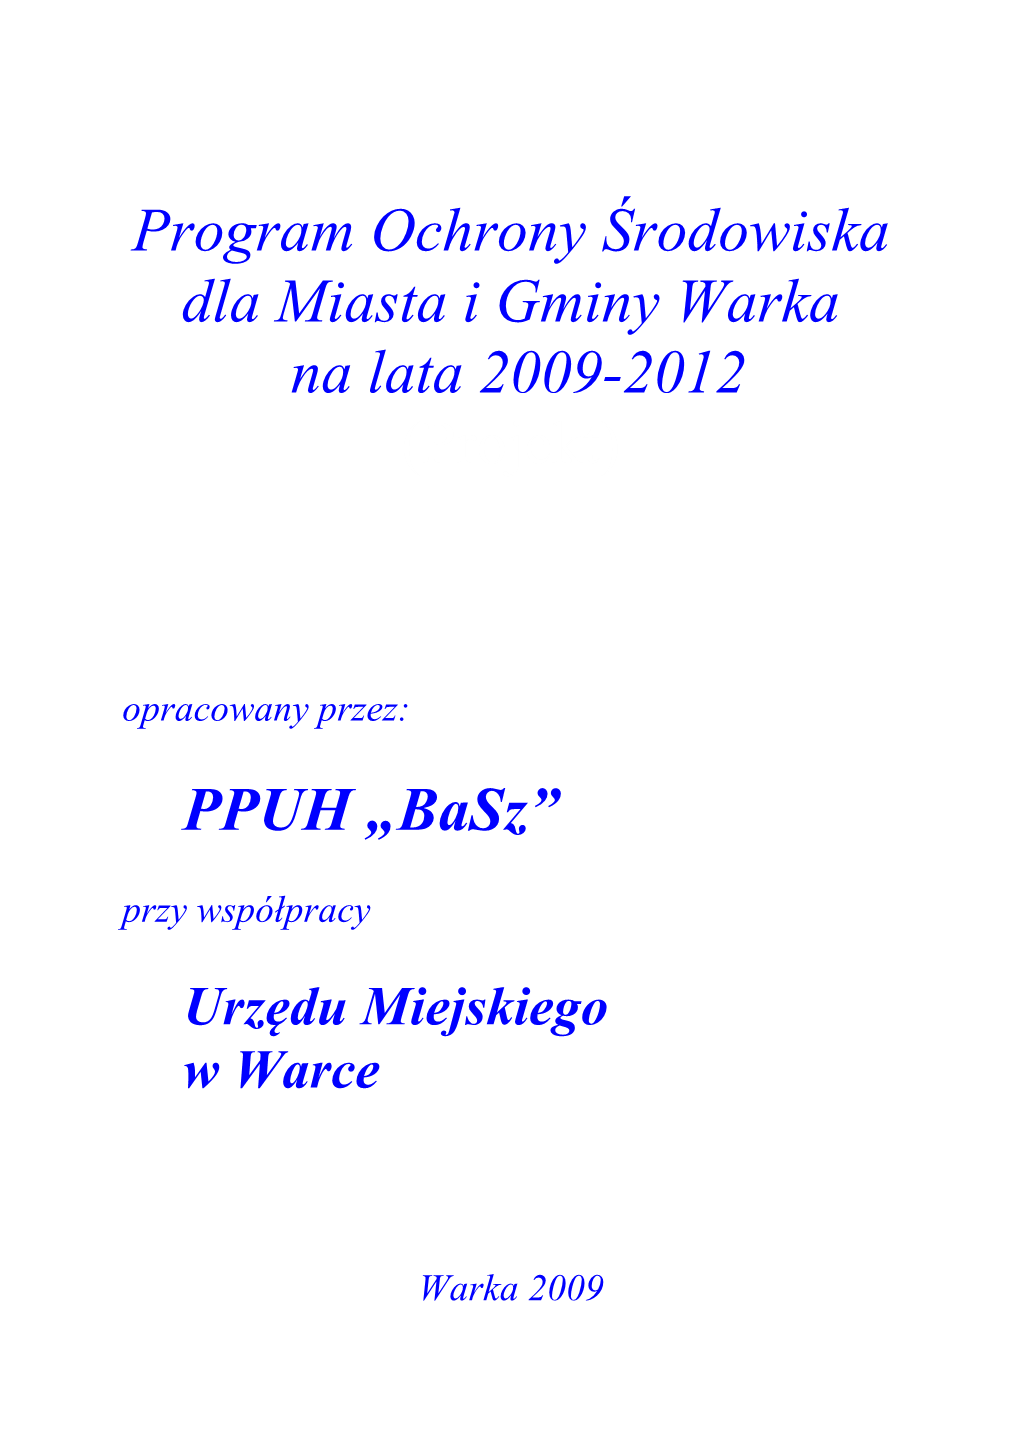 Program Ochrony Środowiska Dla Miasta I Gminy Warka Na Lata 2009-2012 (Projekt) PPUH „Basz”